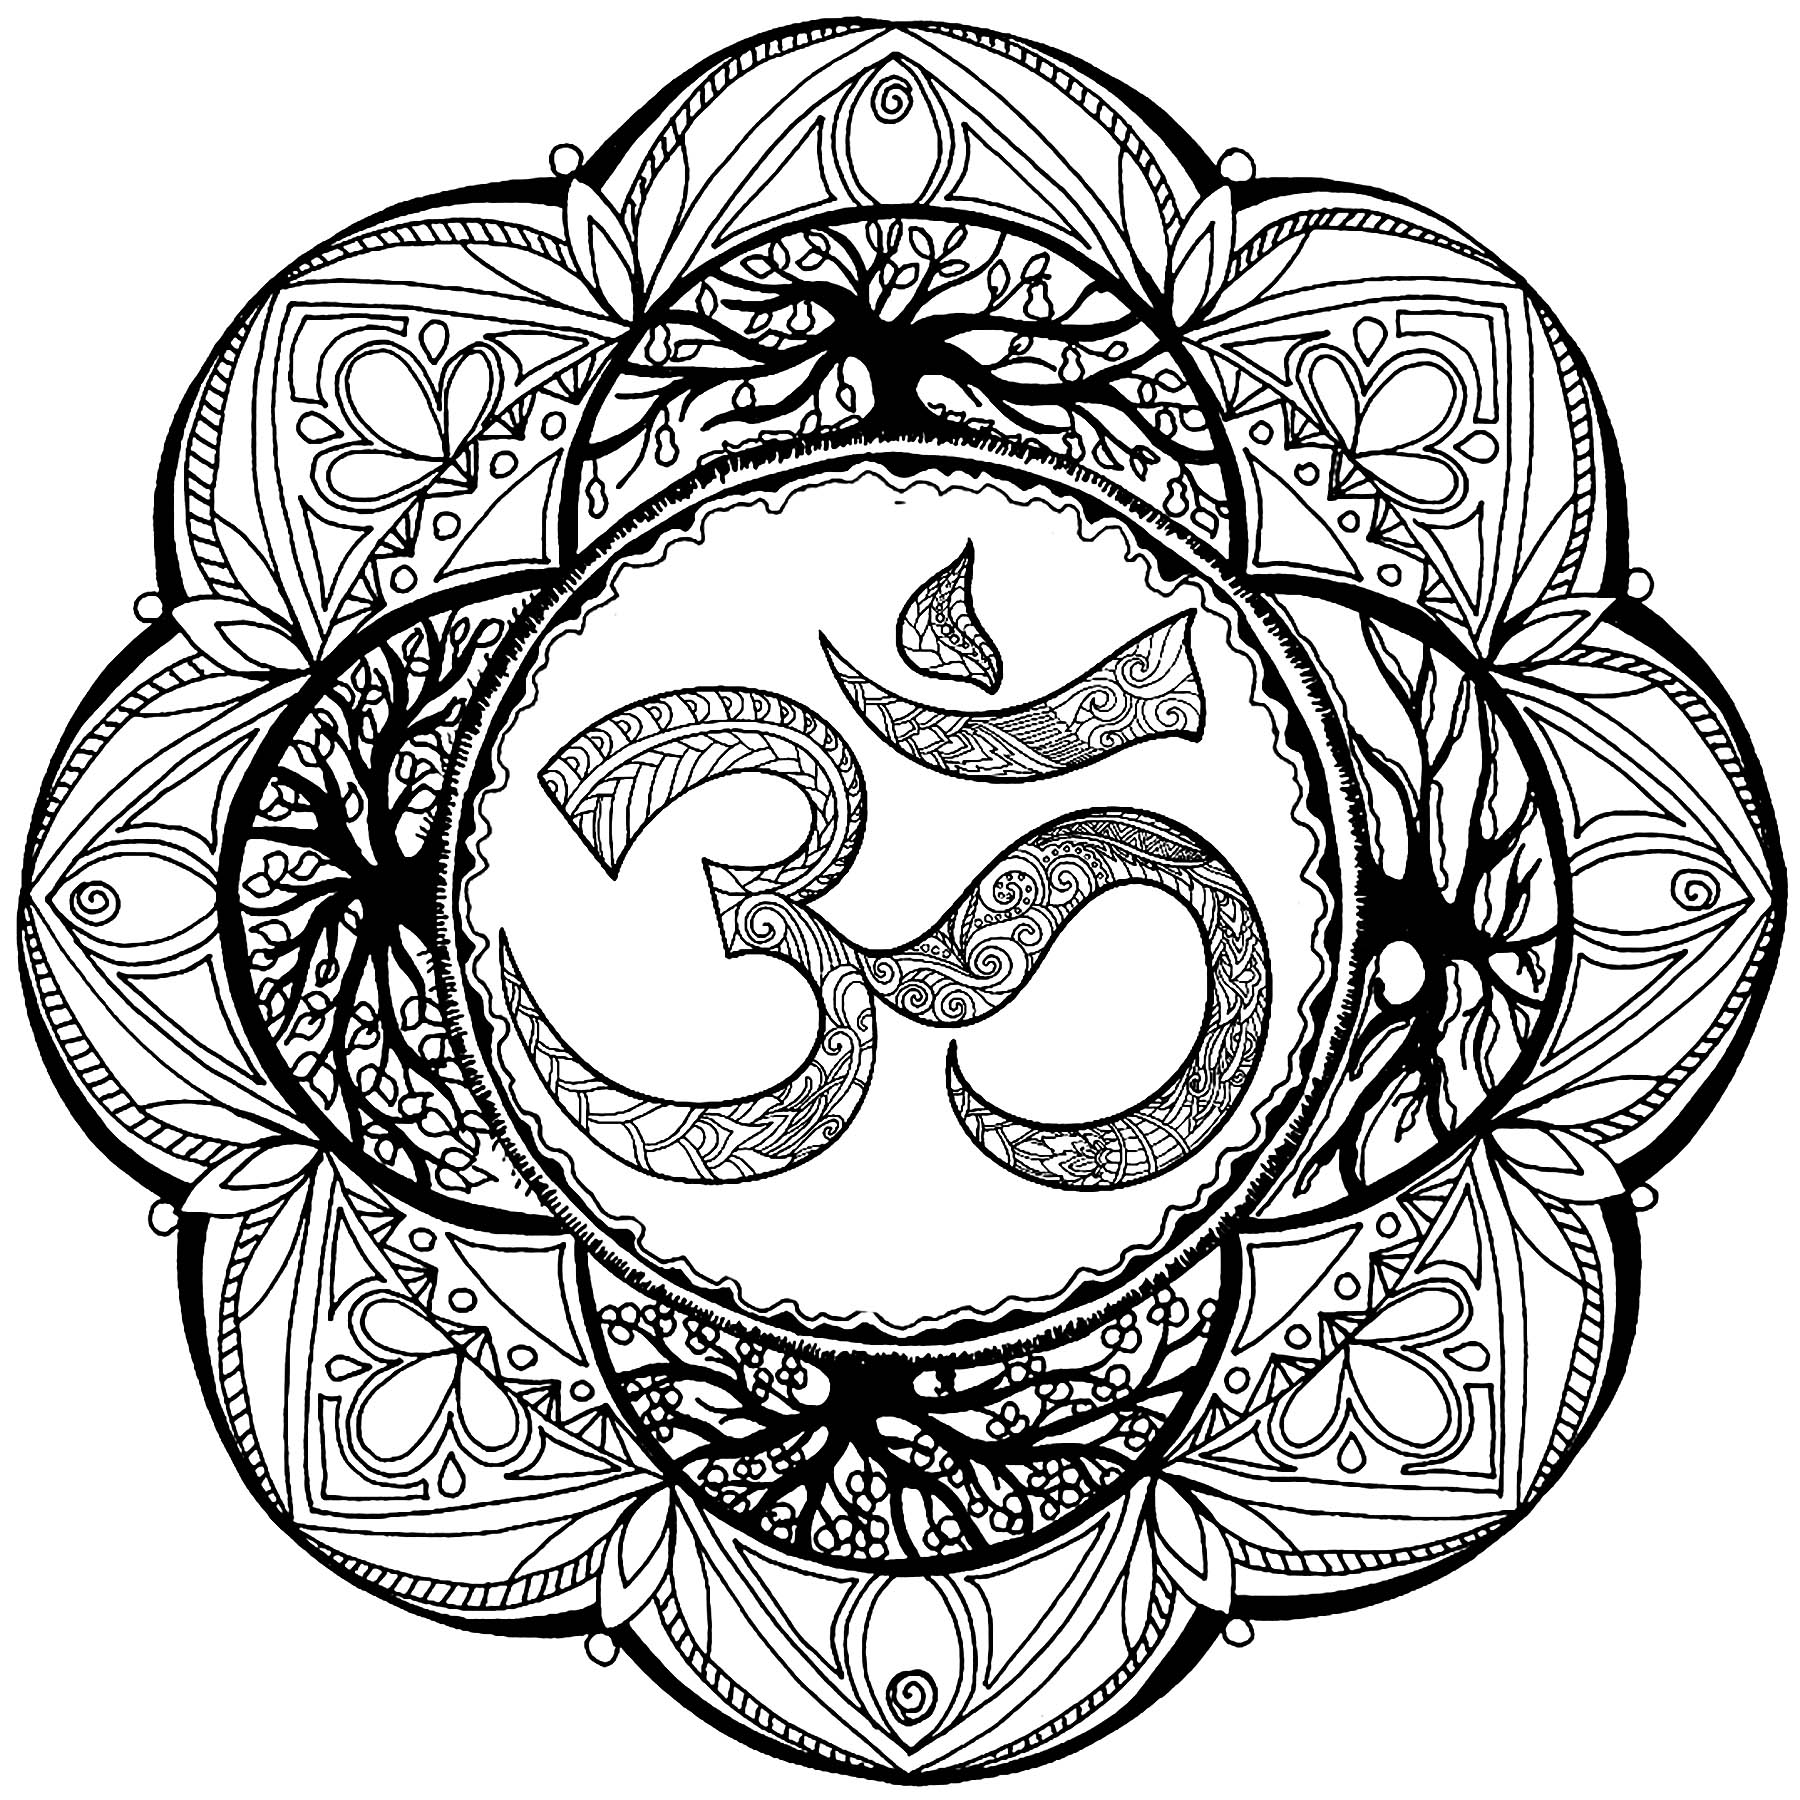 Un joli Mandala composé de motifs complexes et du symbole 'Om'